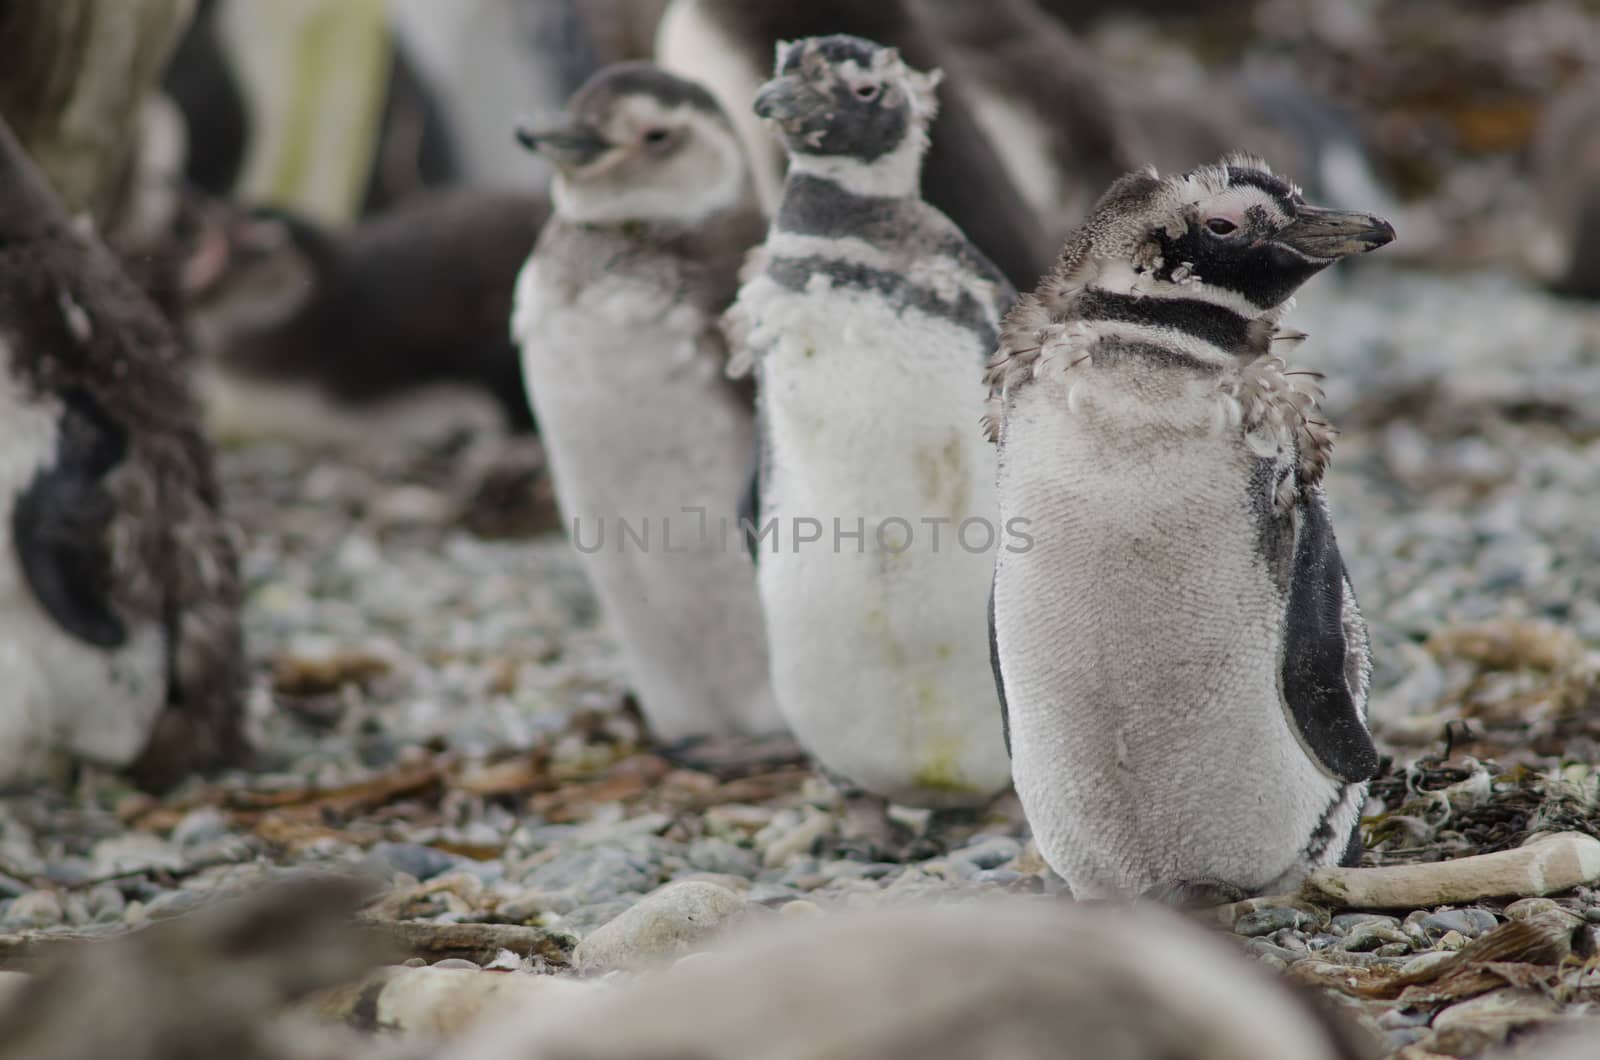 Juveniles Magellanic penguins Spheniscus magellanicus moulting their plumage. Otway Sound and Penguin Reserve. Magallanes Province. Magallanes and Chilean Antarctic Region. Chile.